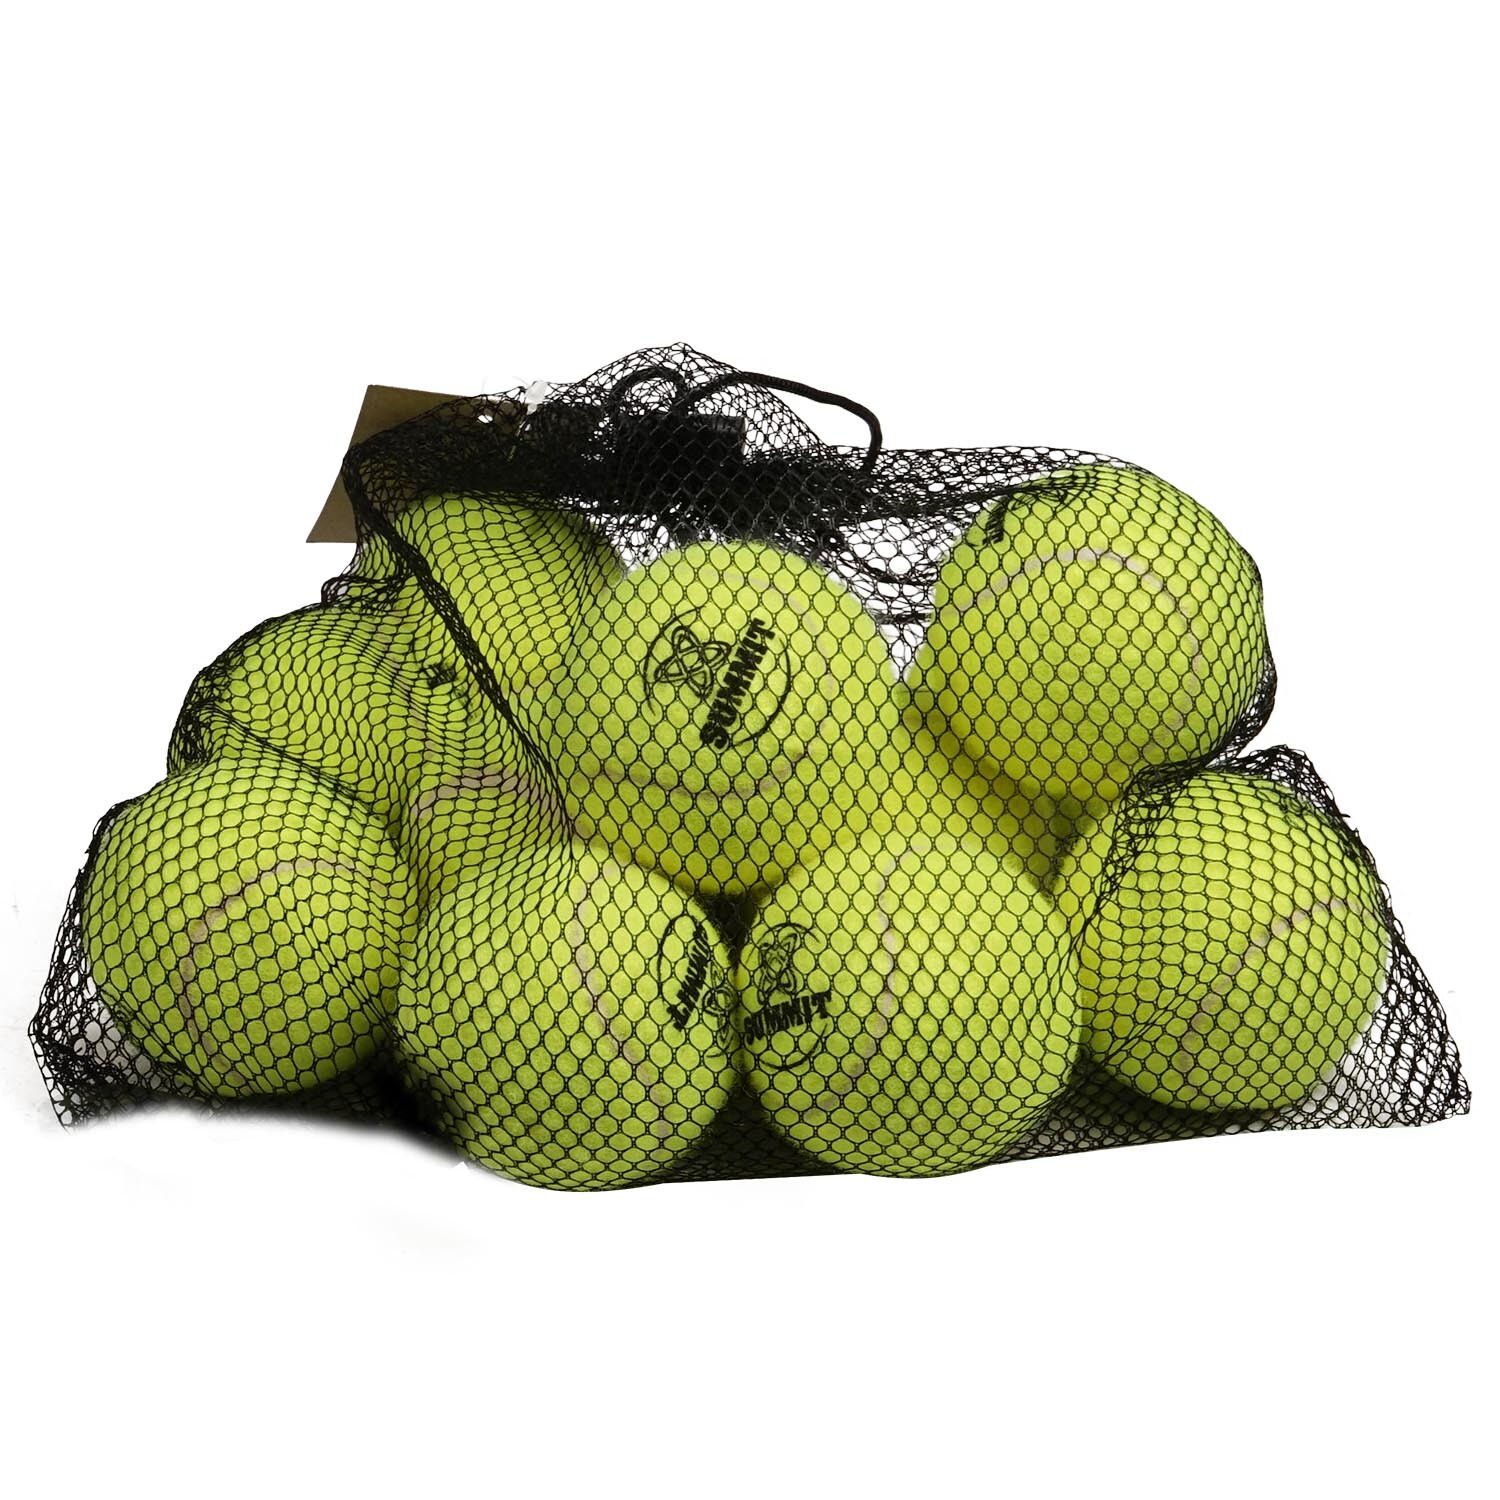 Pack of 12 Summit Tennis Balls in Mesh Bag Image